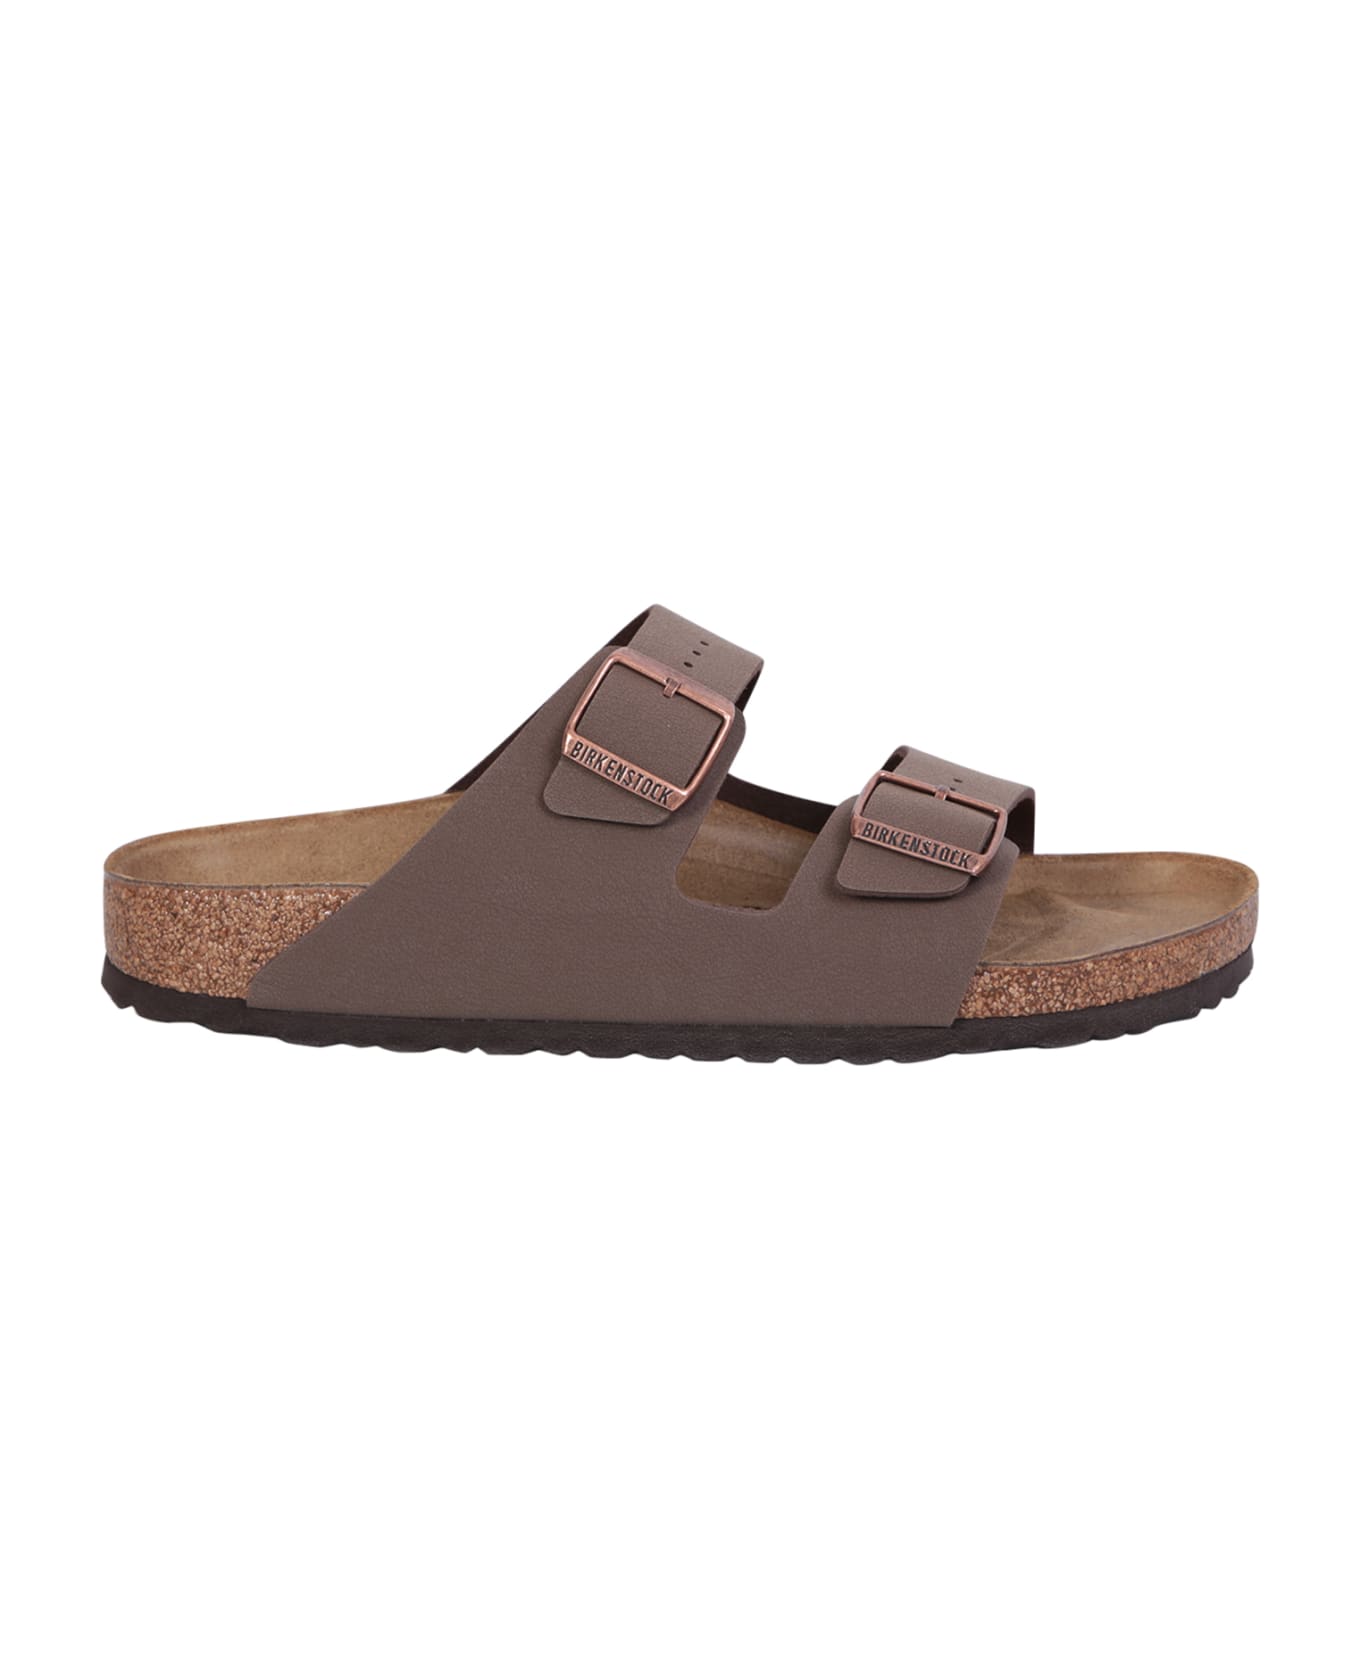 Birkenstock Double-strap Brown Sandals - Brown サンダル